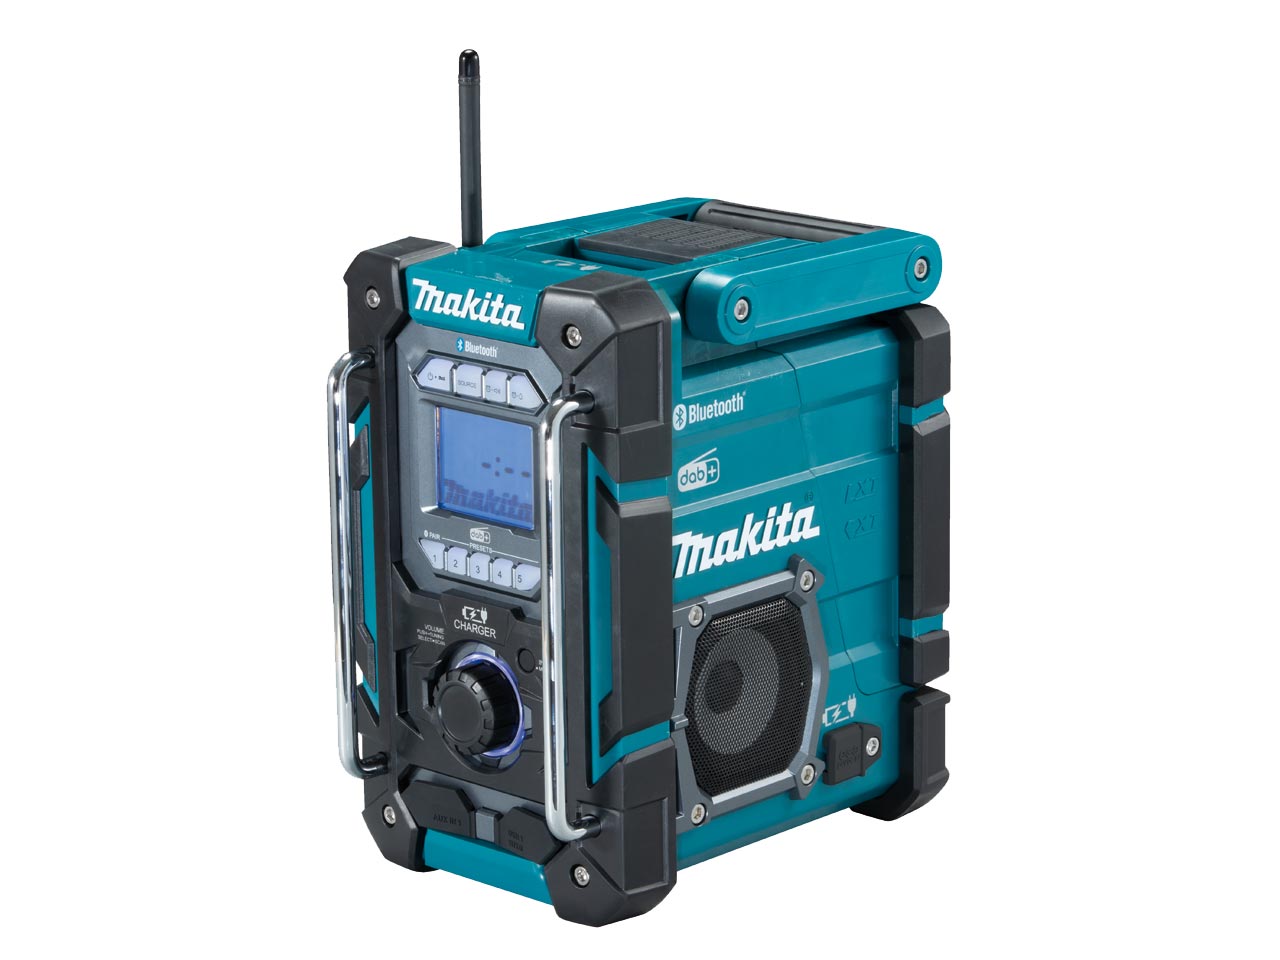 Makita Makita DMR301 12v-18v DAB Job Site Bluetooth Radio Charger Bare Unit